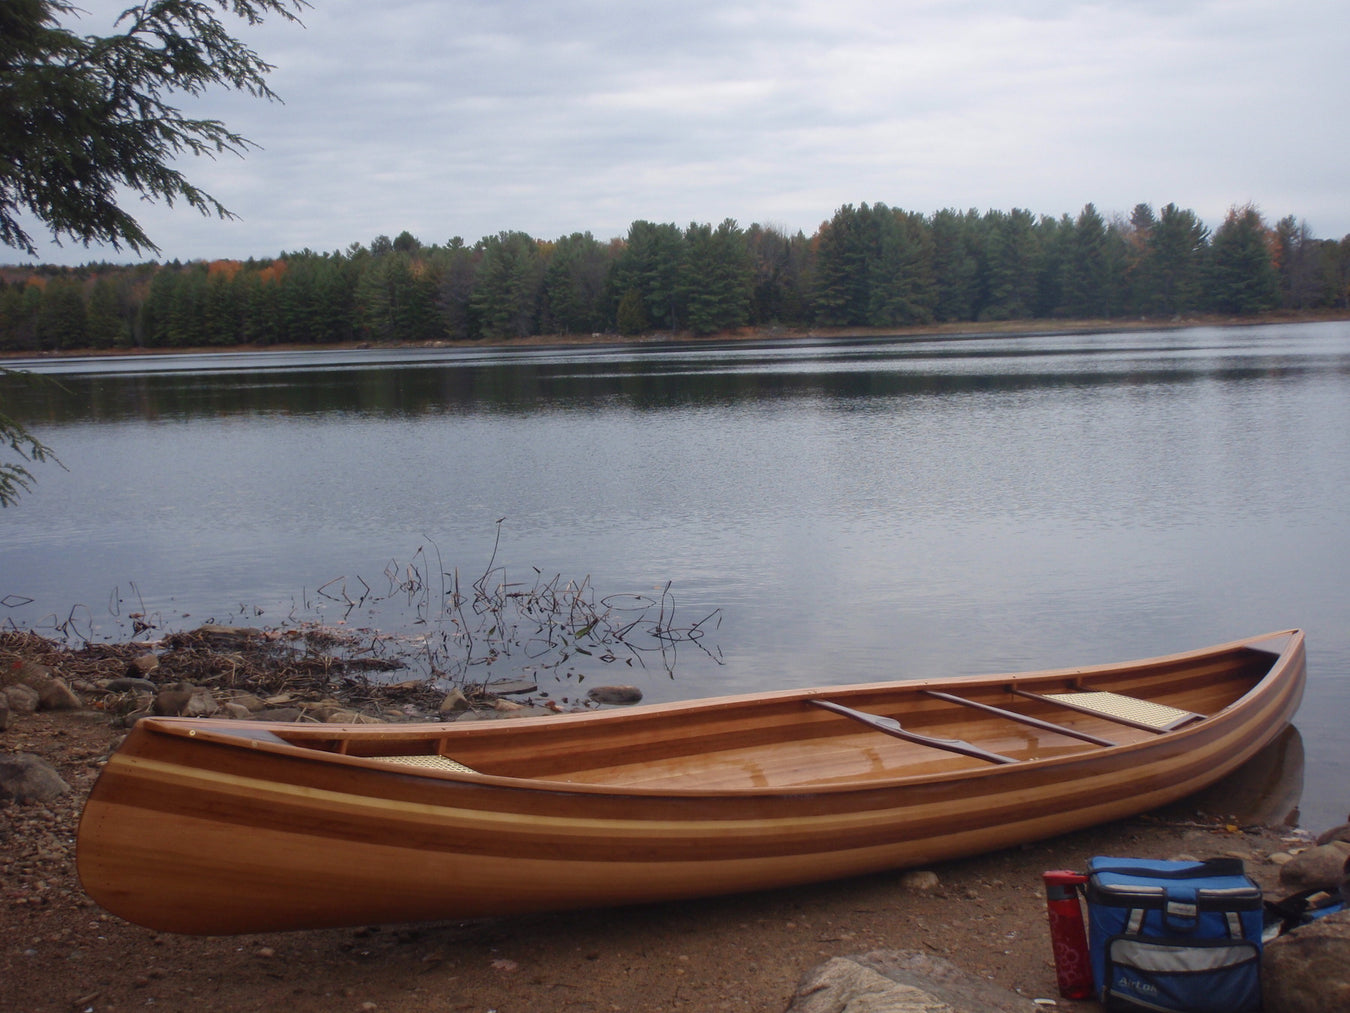 Cedar strip canoe at a lake